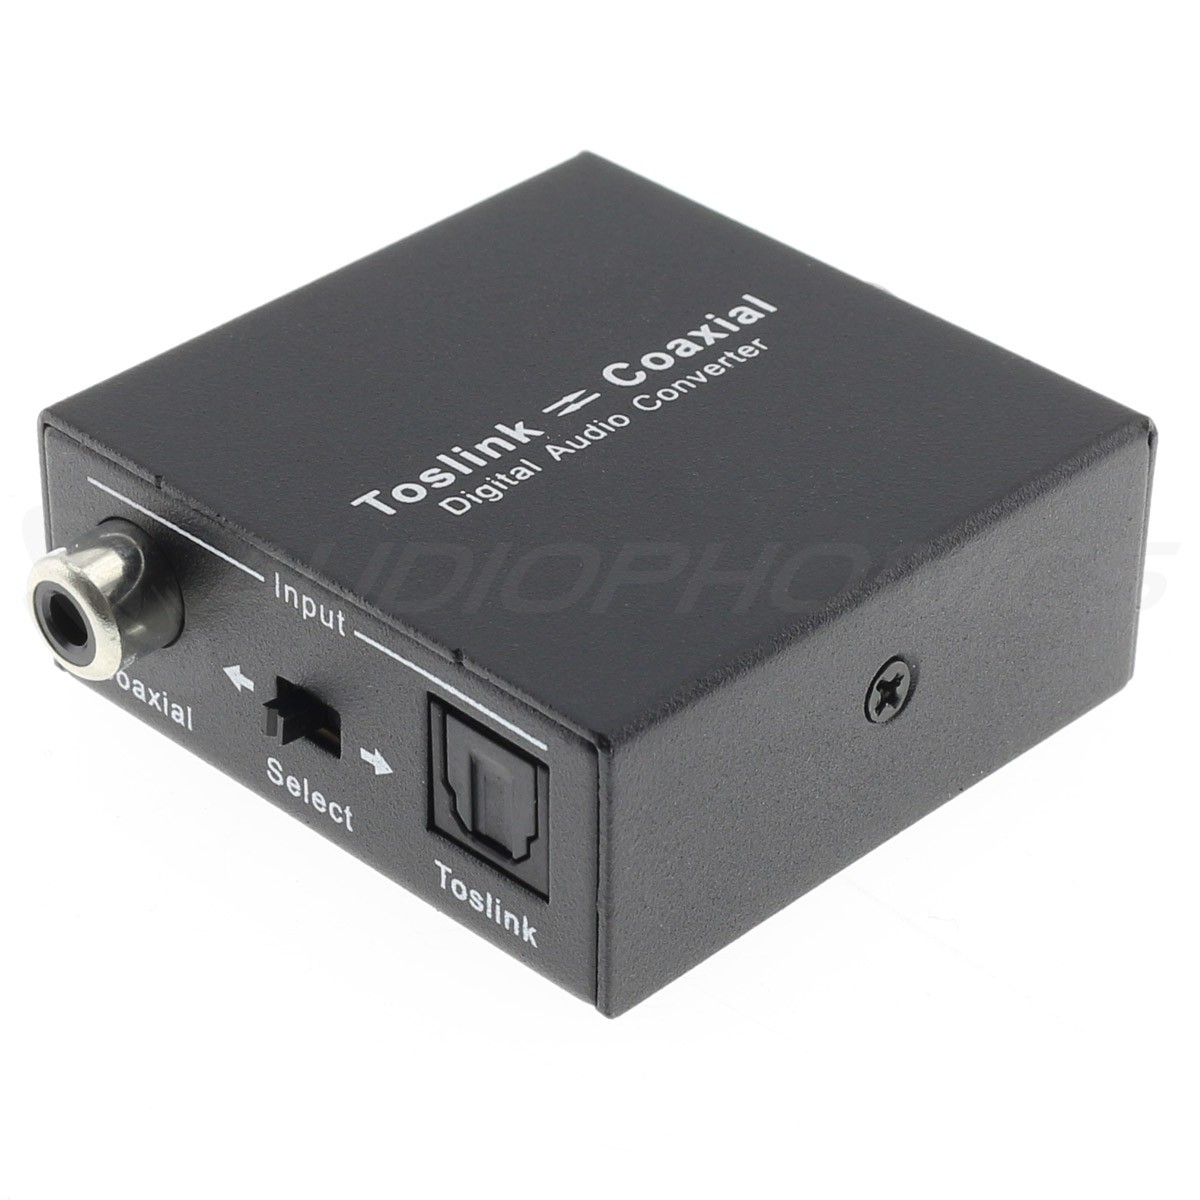 Convertisseur Audio 192 KHz Optique SPDIF ou coaxial digital